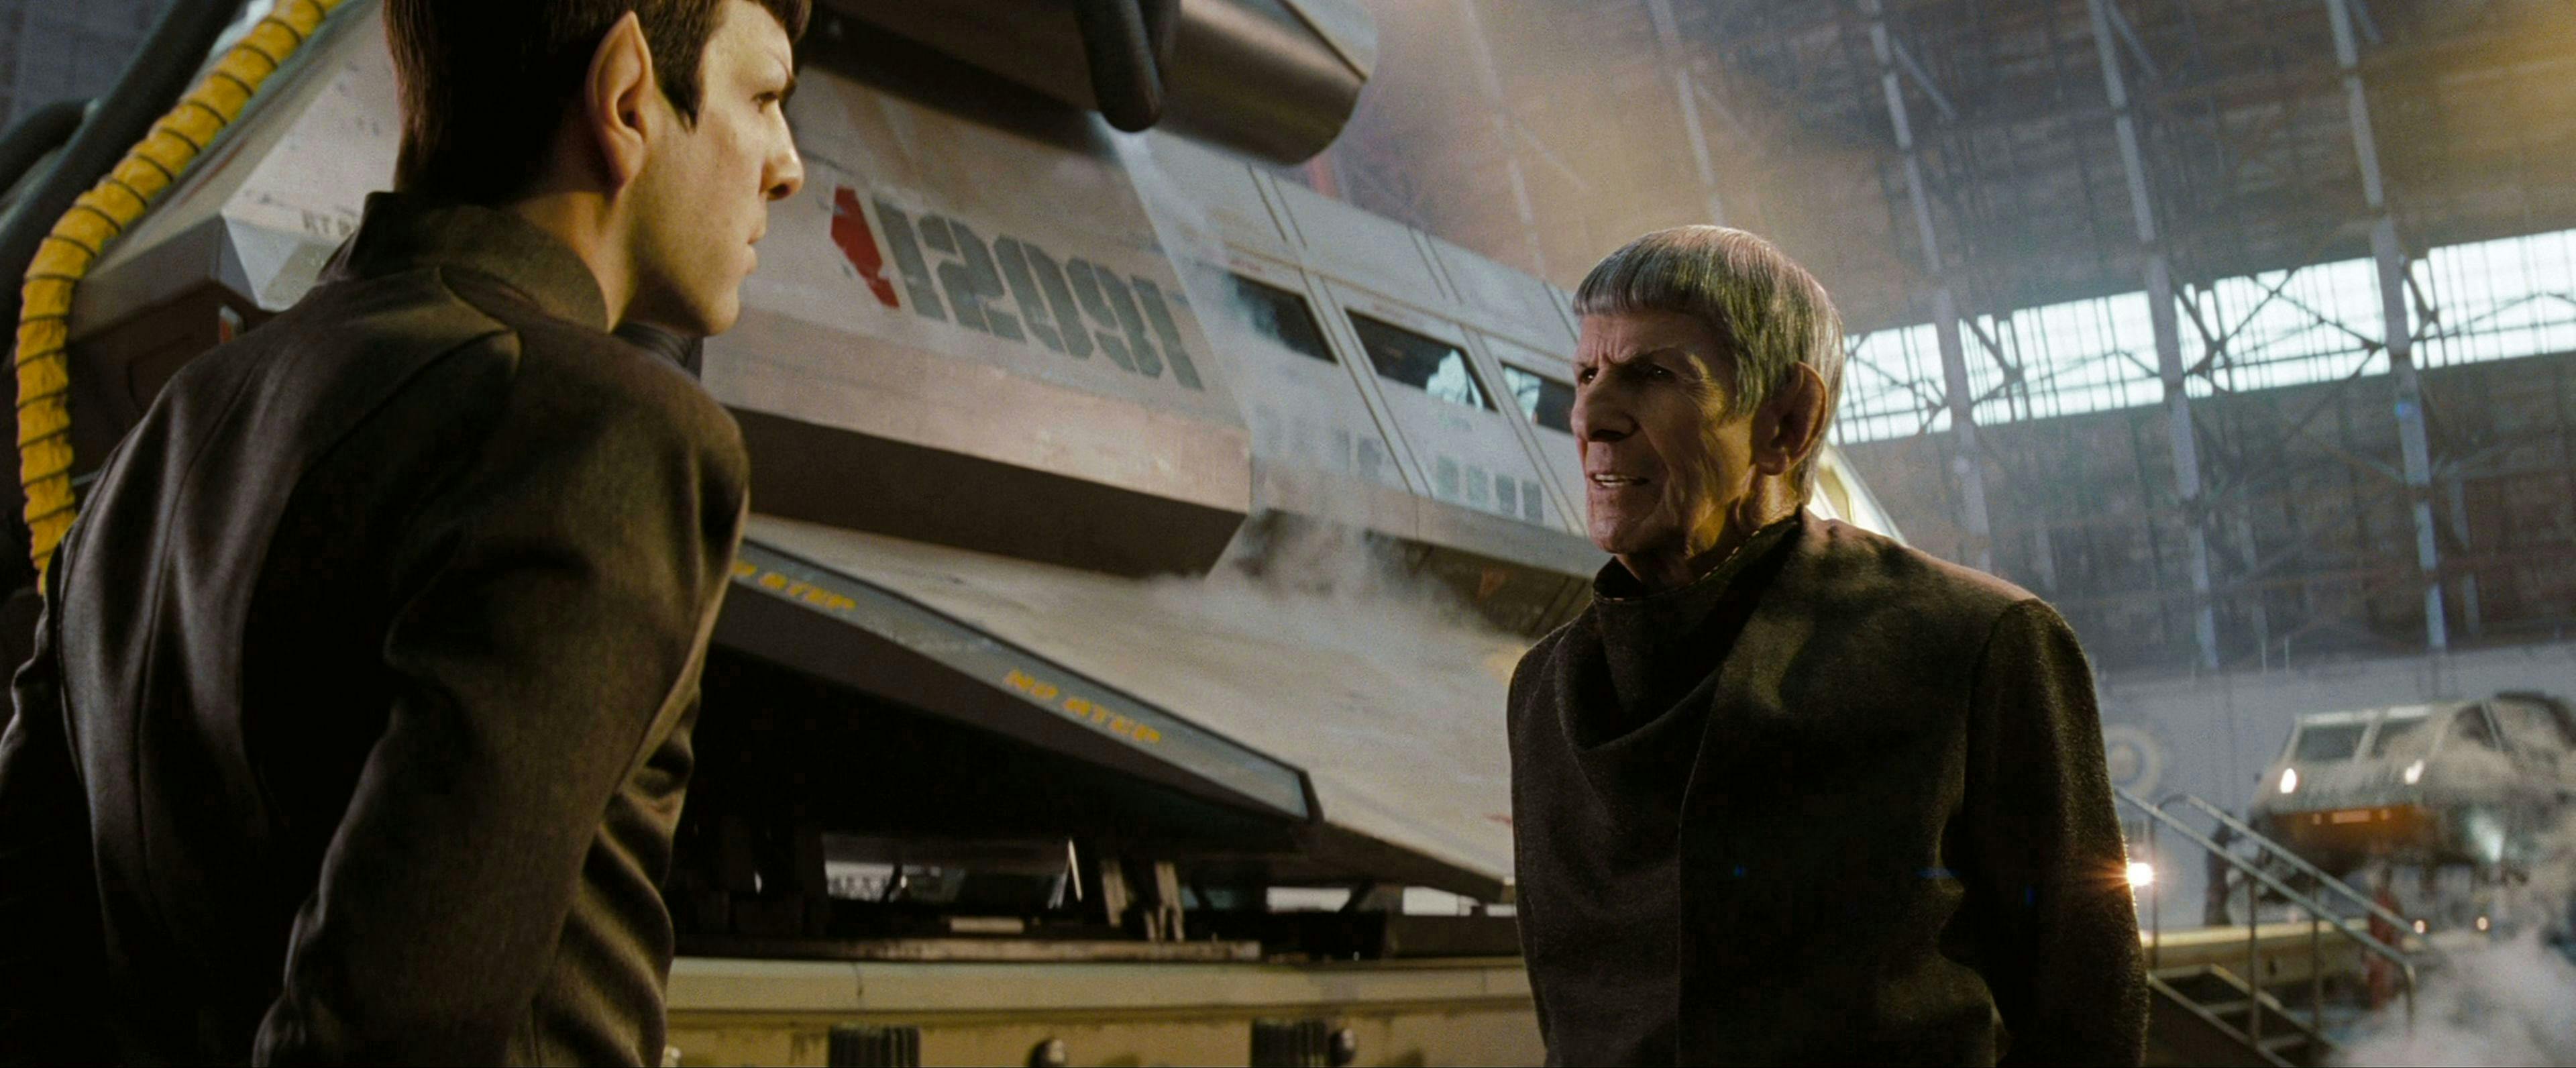 Breaking temporal rules, Prime Spock meets with Kelvin Spock beside a shuttle in Star Trek (2009)